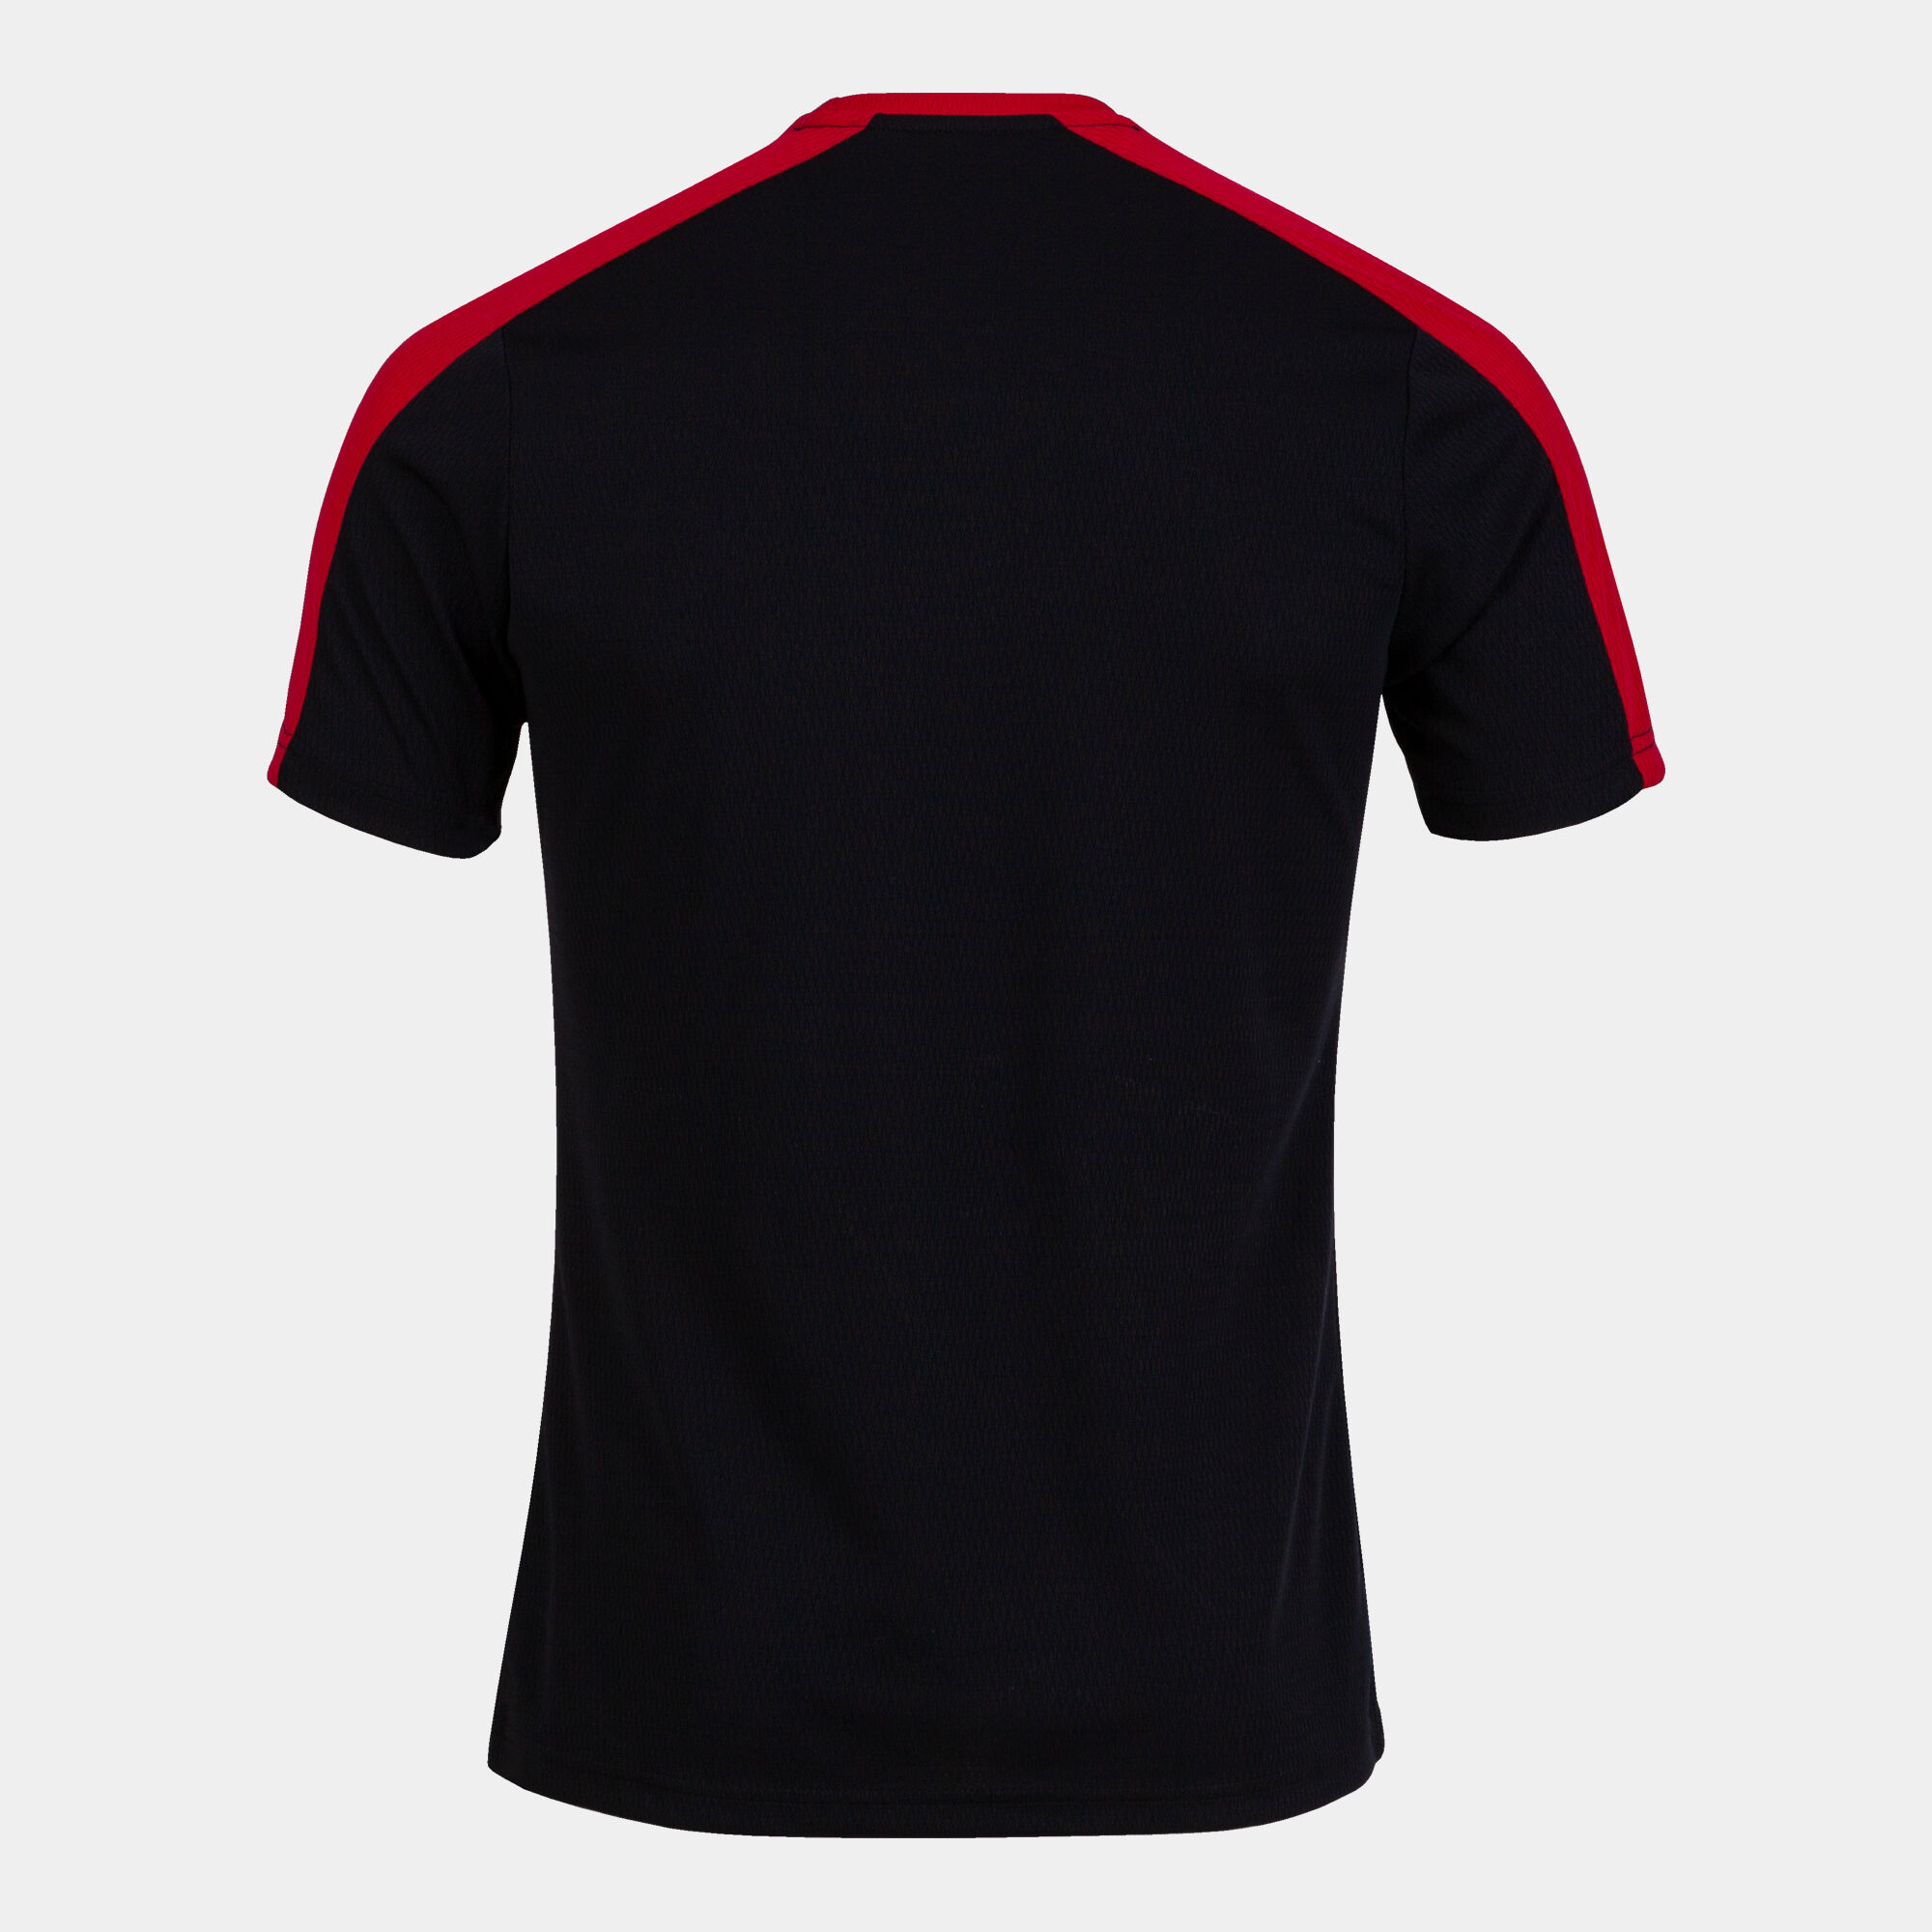 Camiseta manga corta hombre Eco Championship negro rojo